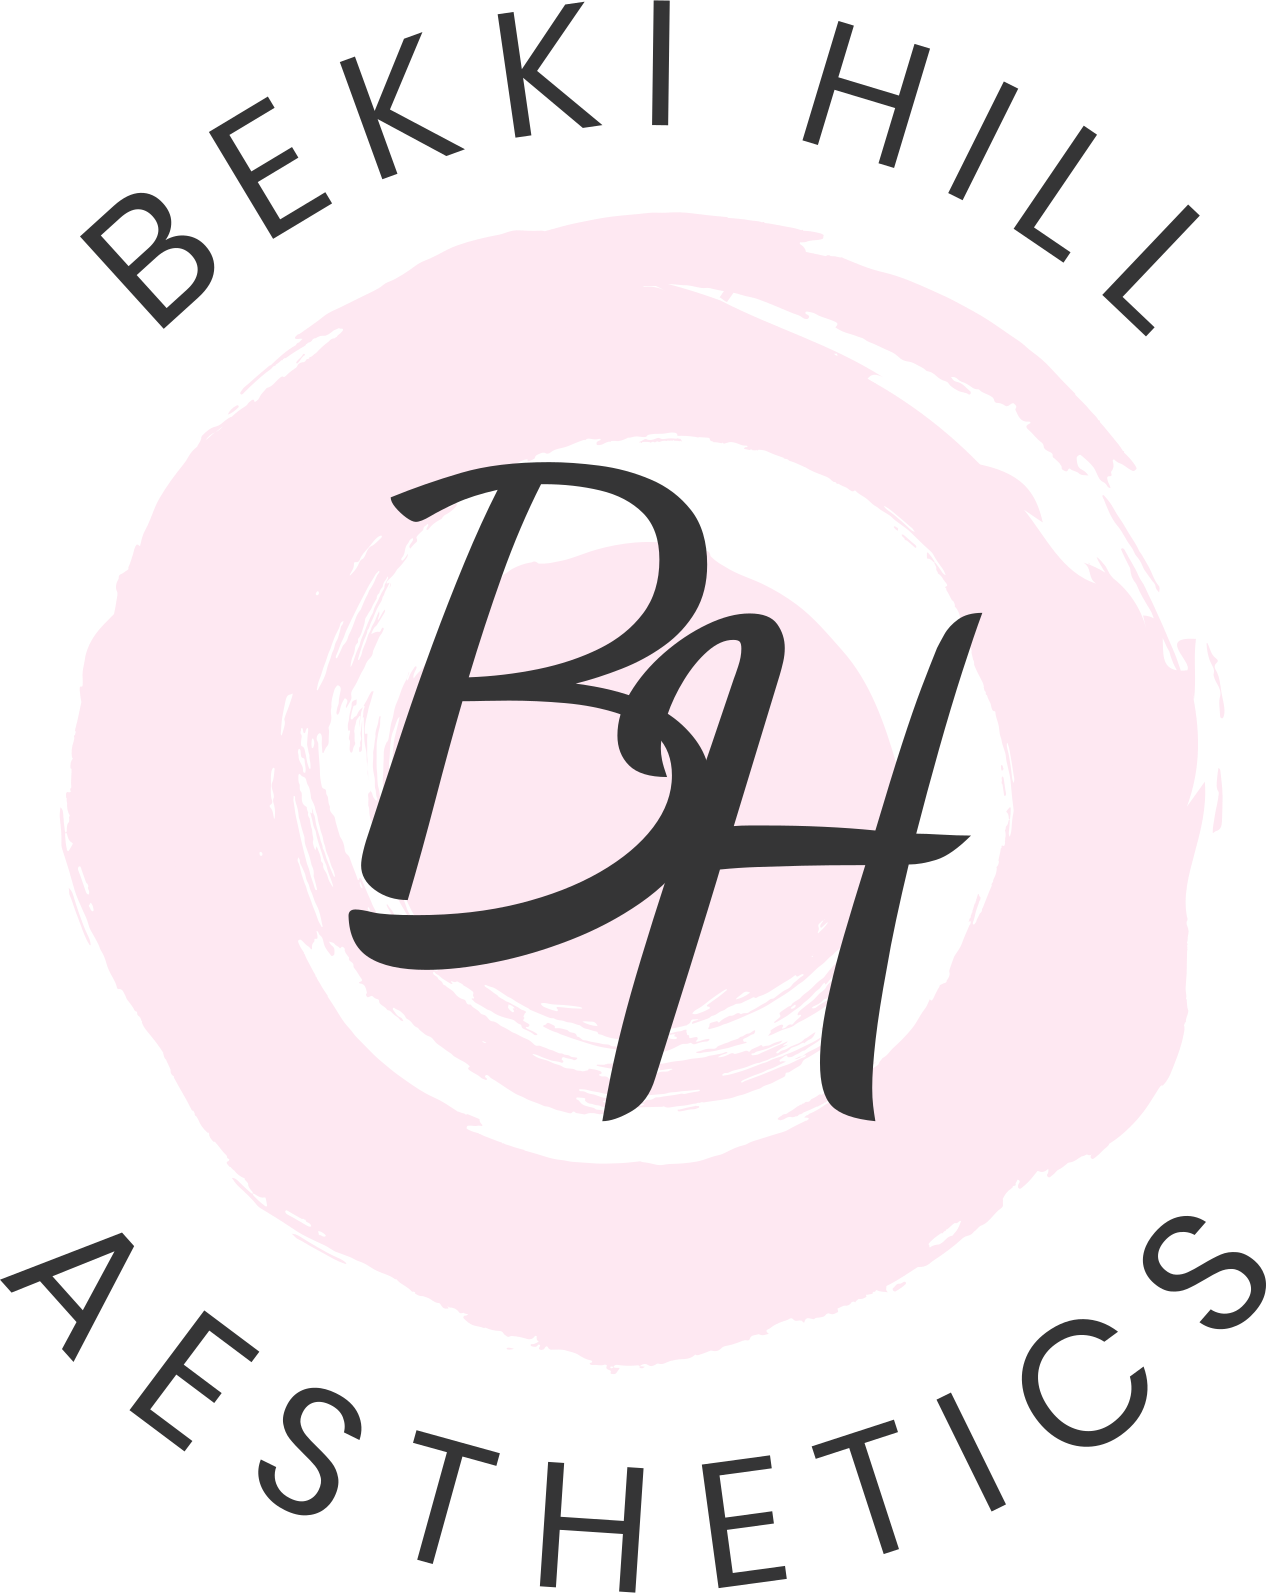 bekki hill asthetics logo